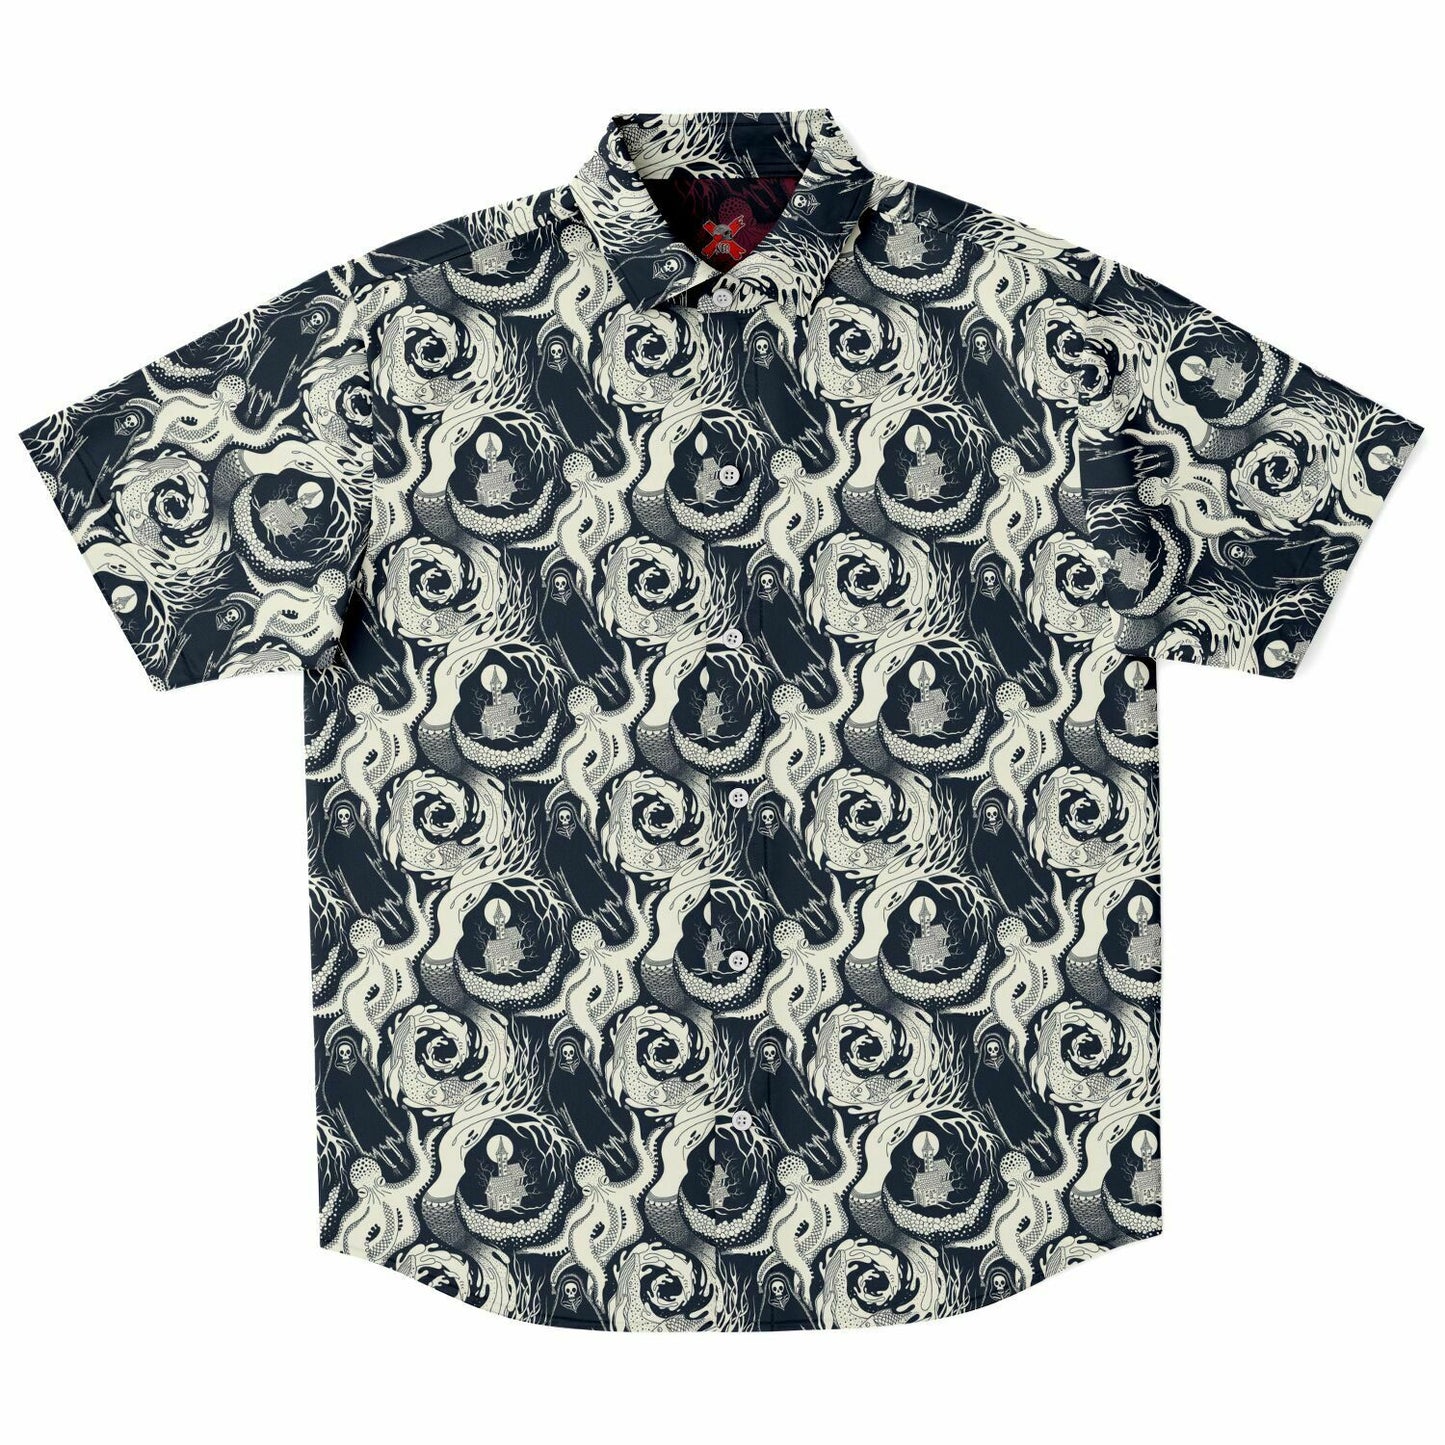 Phantasmagory short sleeve button-up shirt